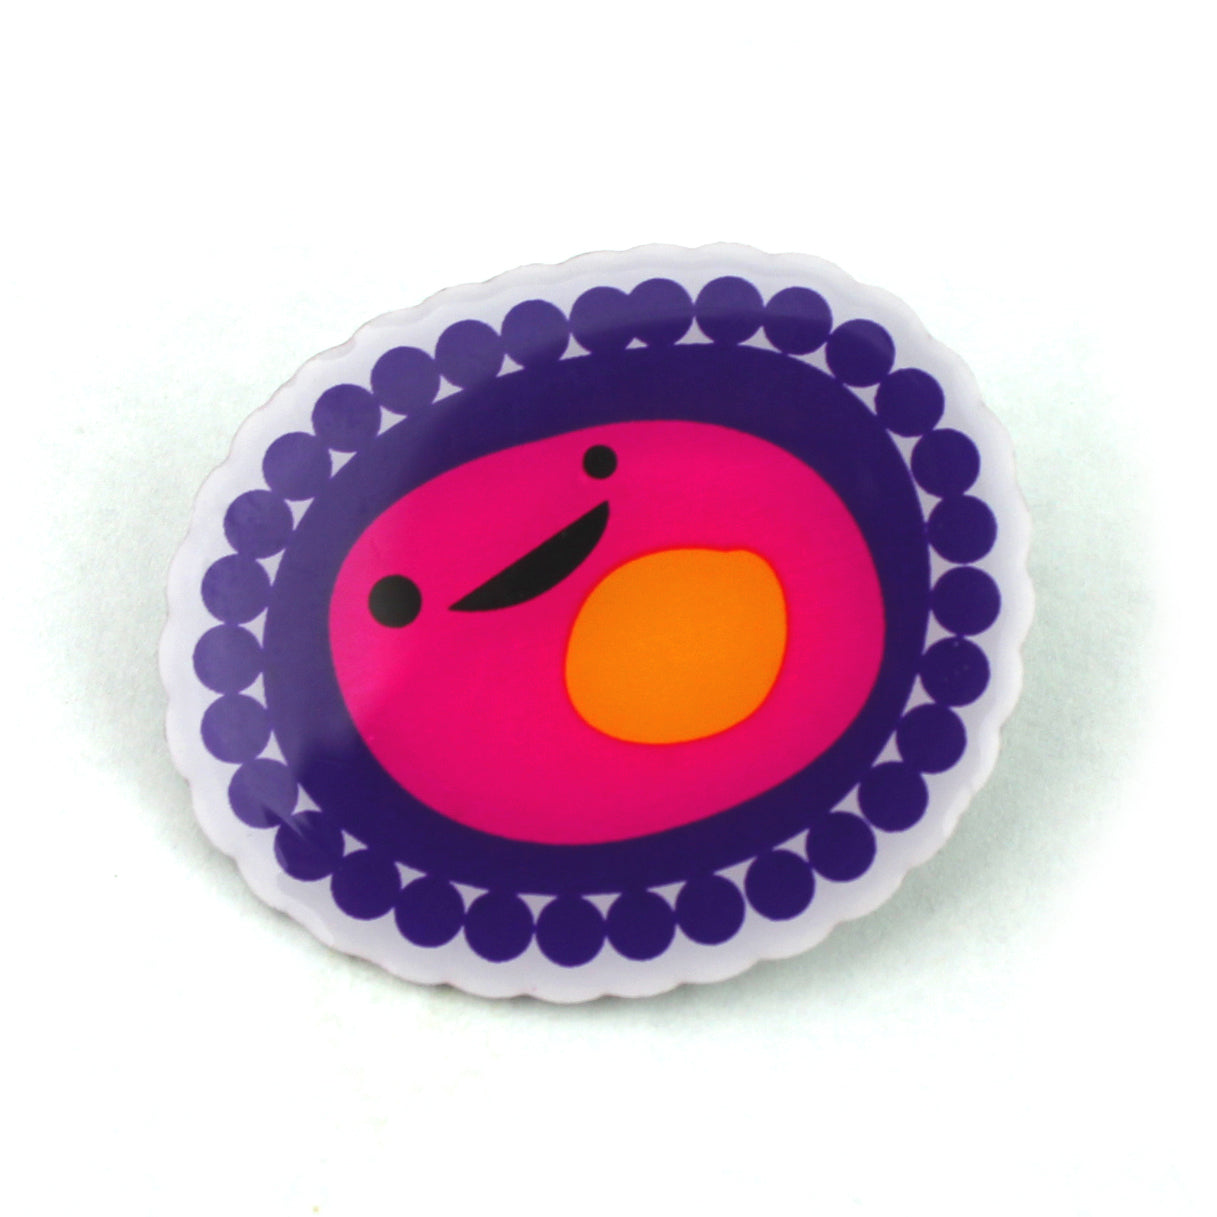 Ovum Lapel Pin | OB/GYN Funny Cute IVF TTC Ovulation - Ovum Character Enamel Pin